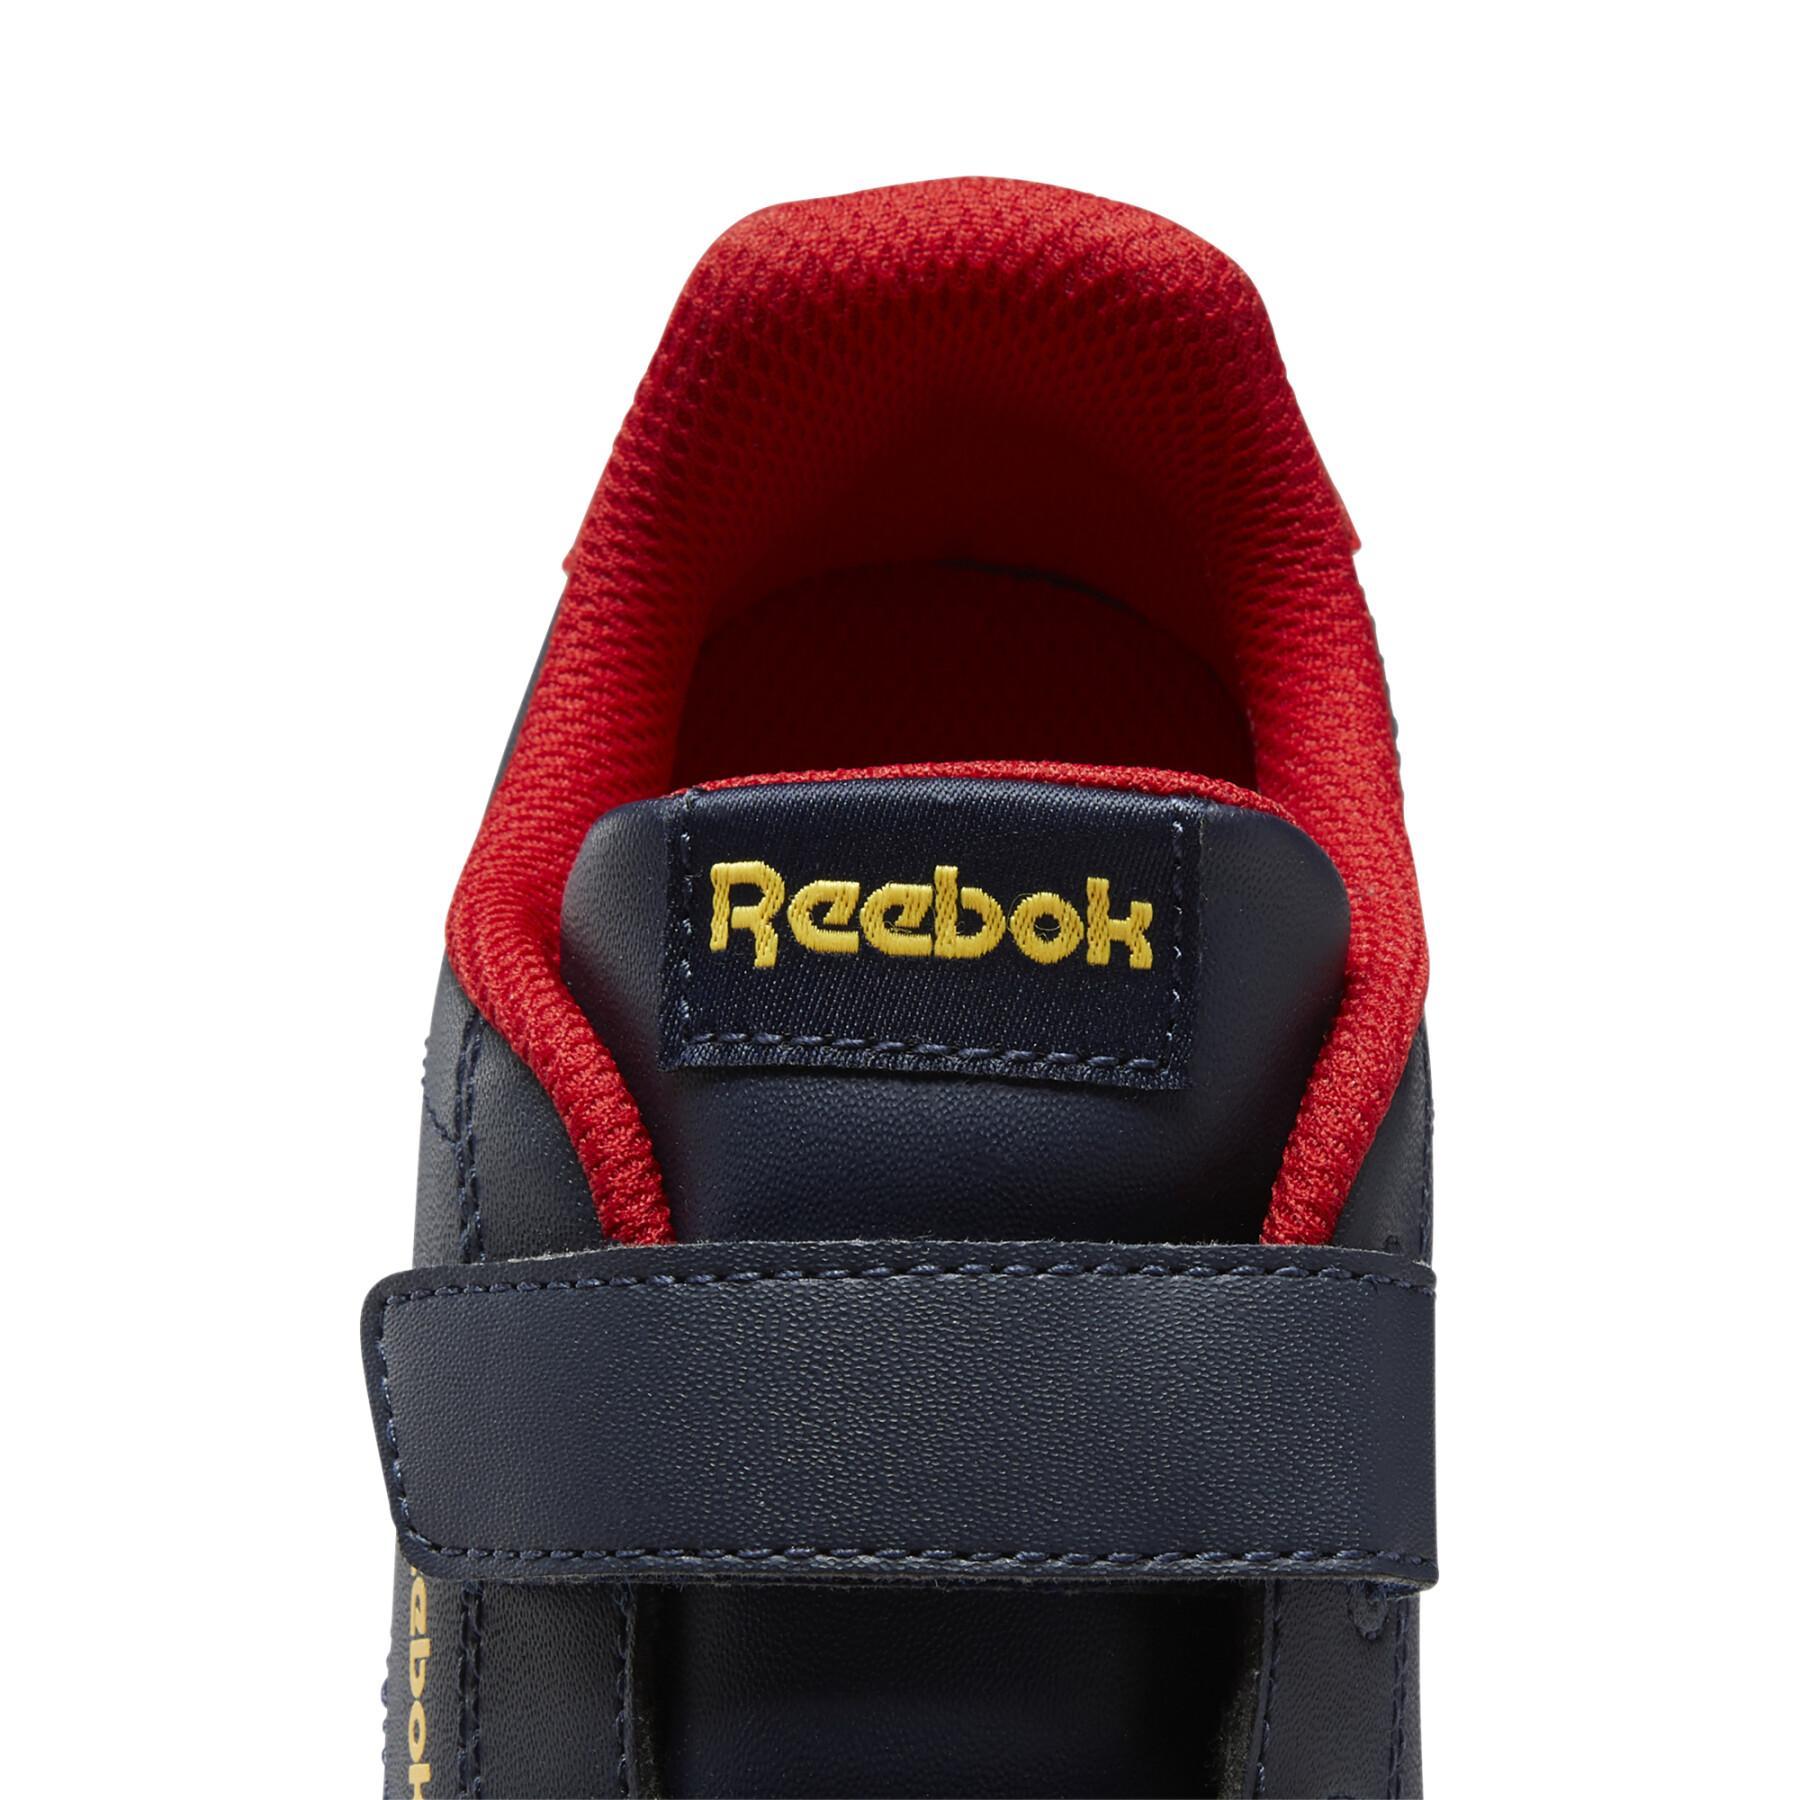 Kinderschoenen Reebok Royal Complete 2